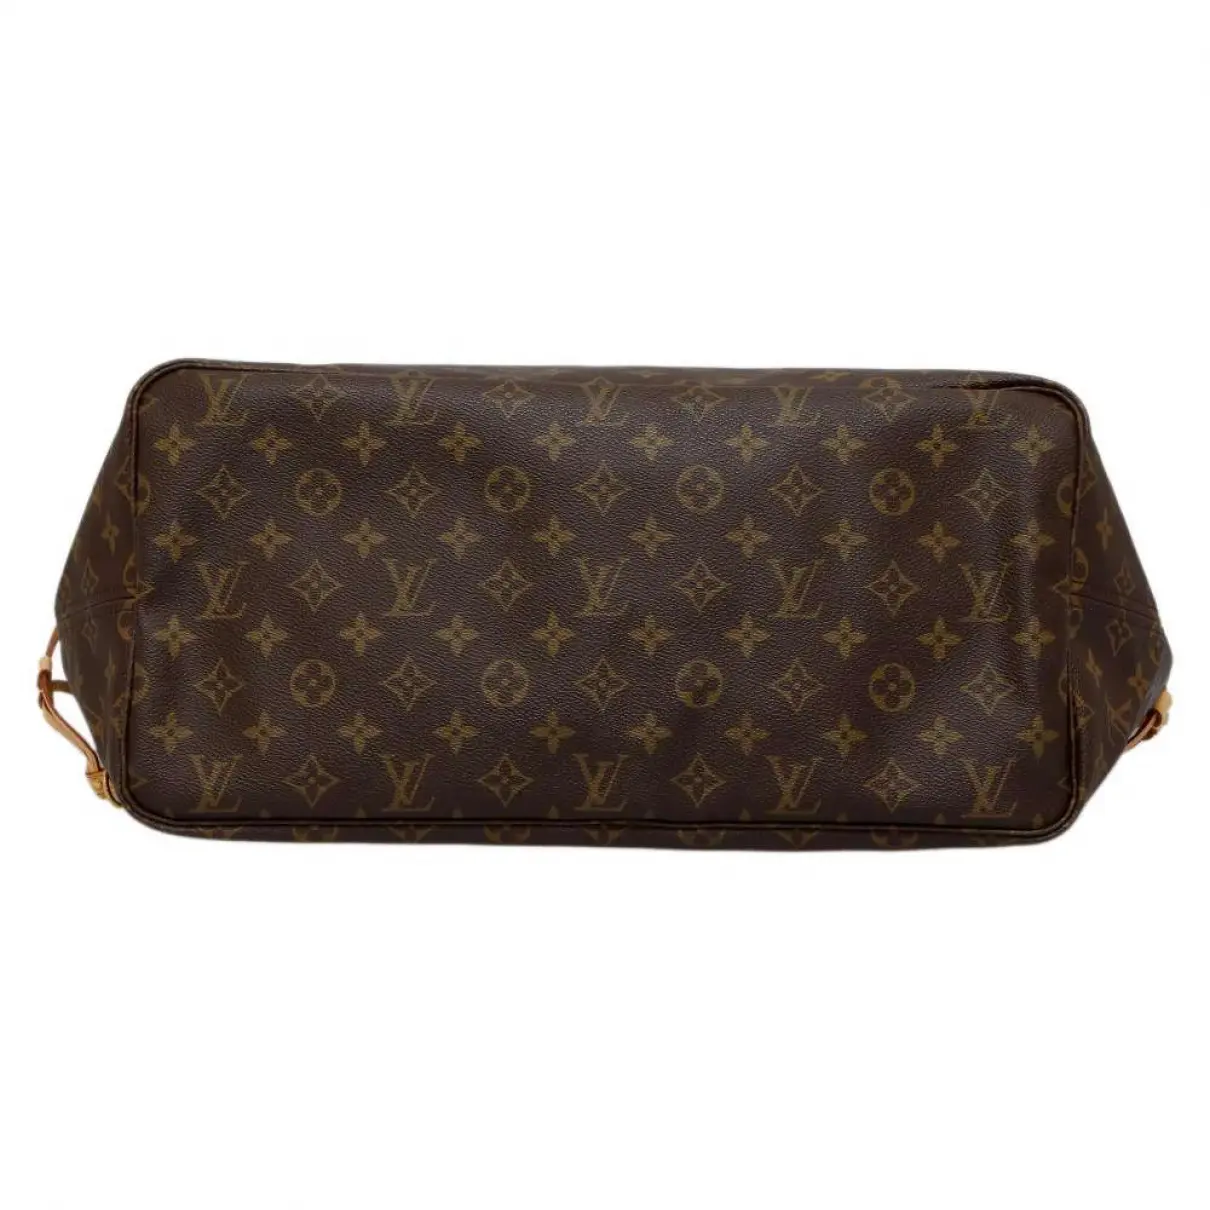 Neverfull leather handbag Louis Vuitton